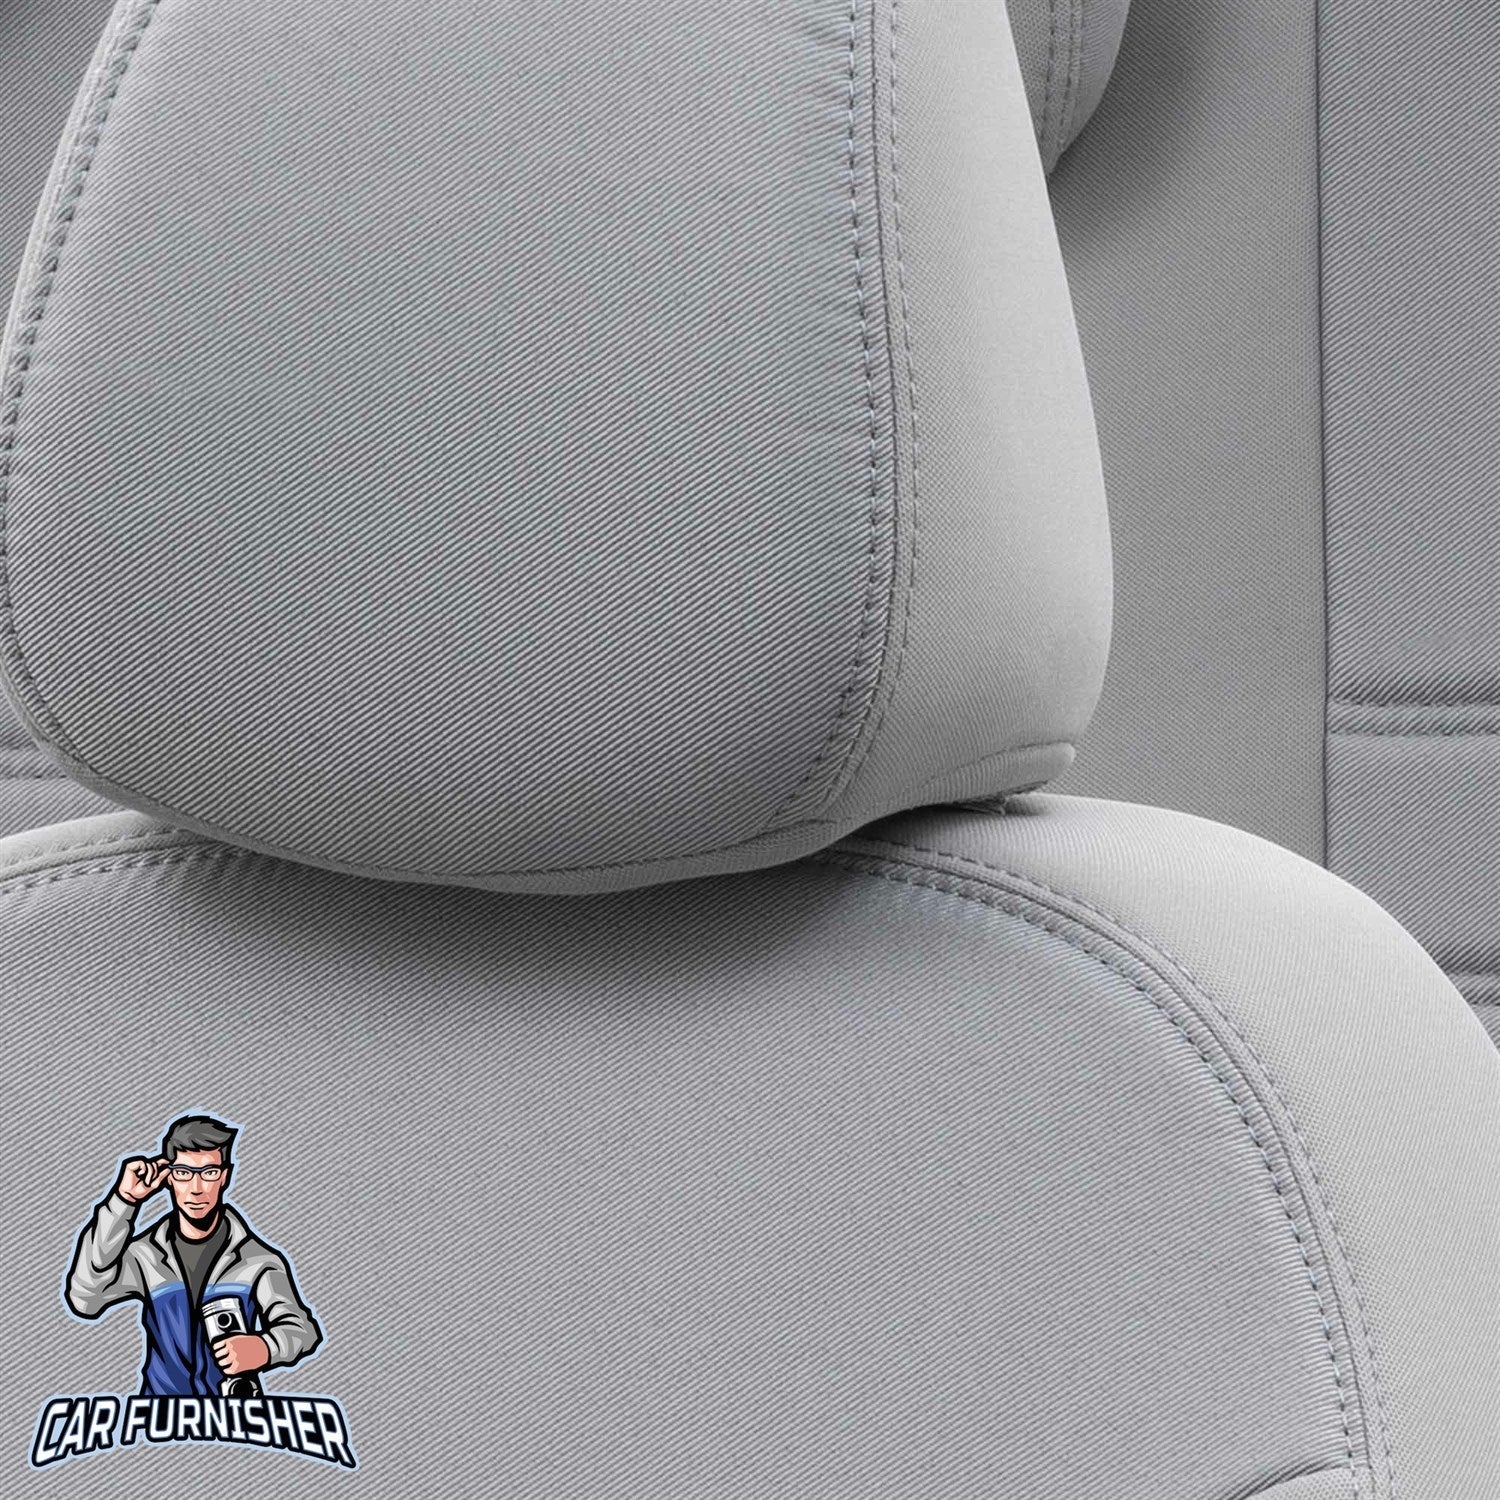 Renault Twingo Seat Cover Original Jacquard Design Light Gray Jacquard Fabric